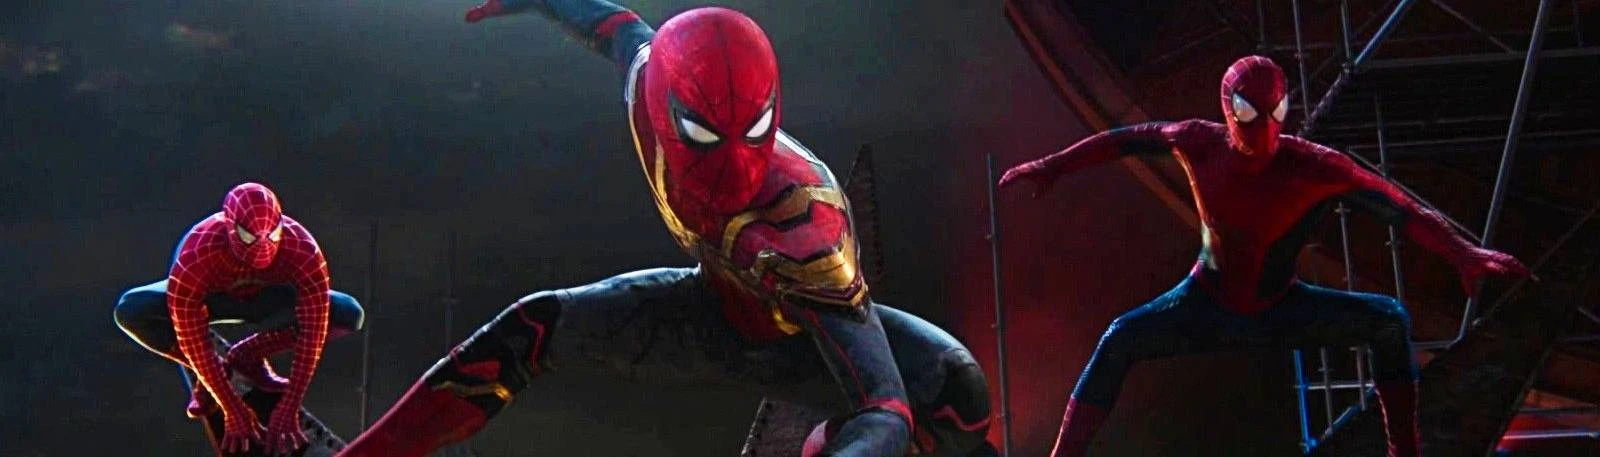 Change Main menu music in Spiderman Remastered PC at Marvel's Spider-Man  Remastered Nexus - Mods and community